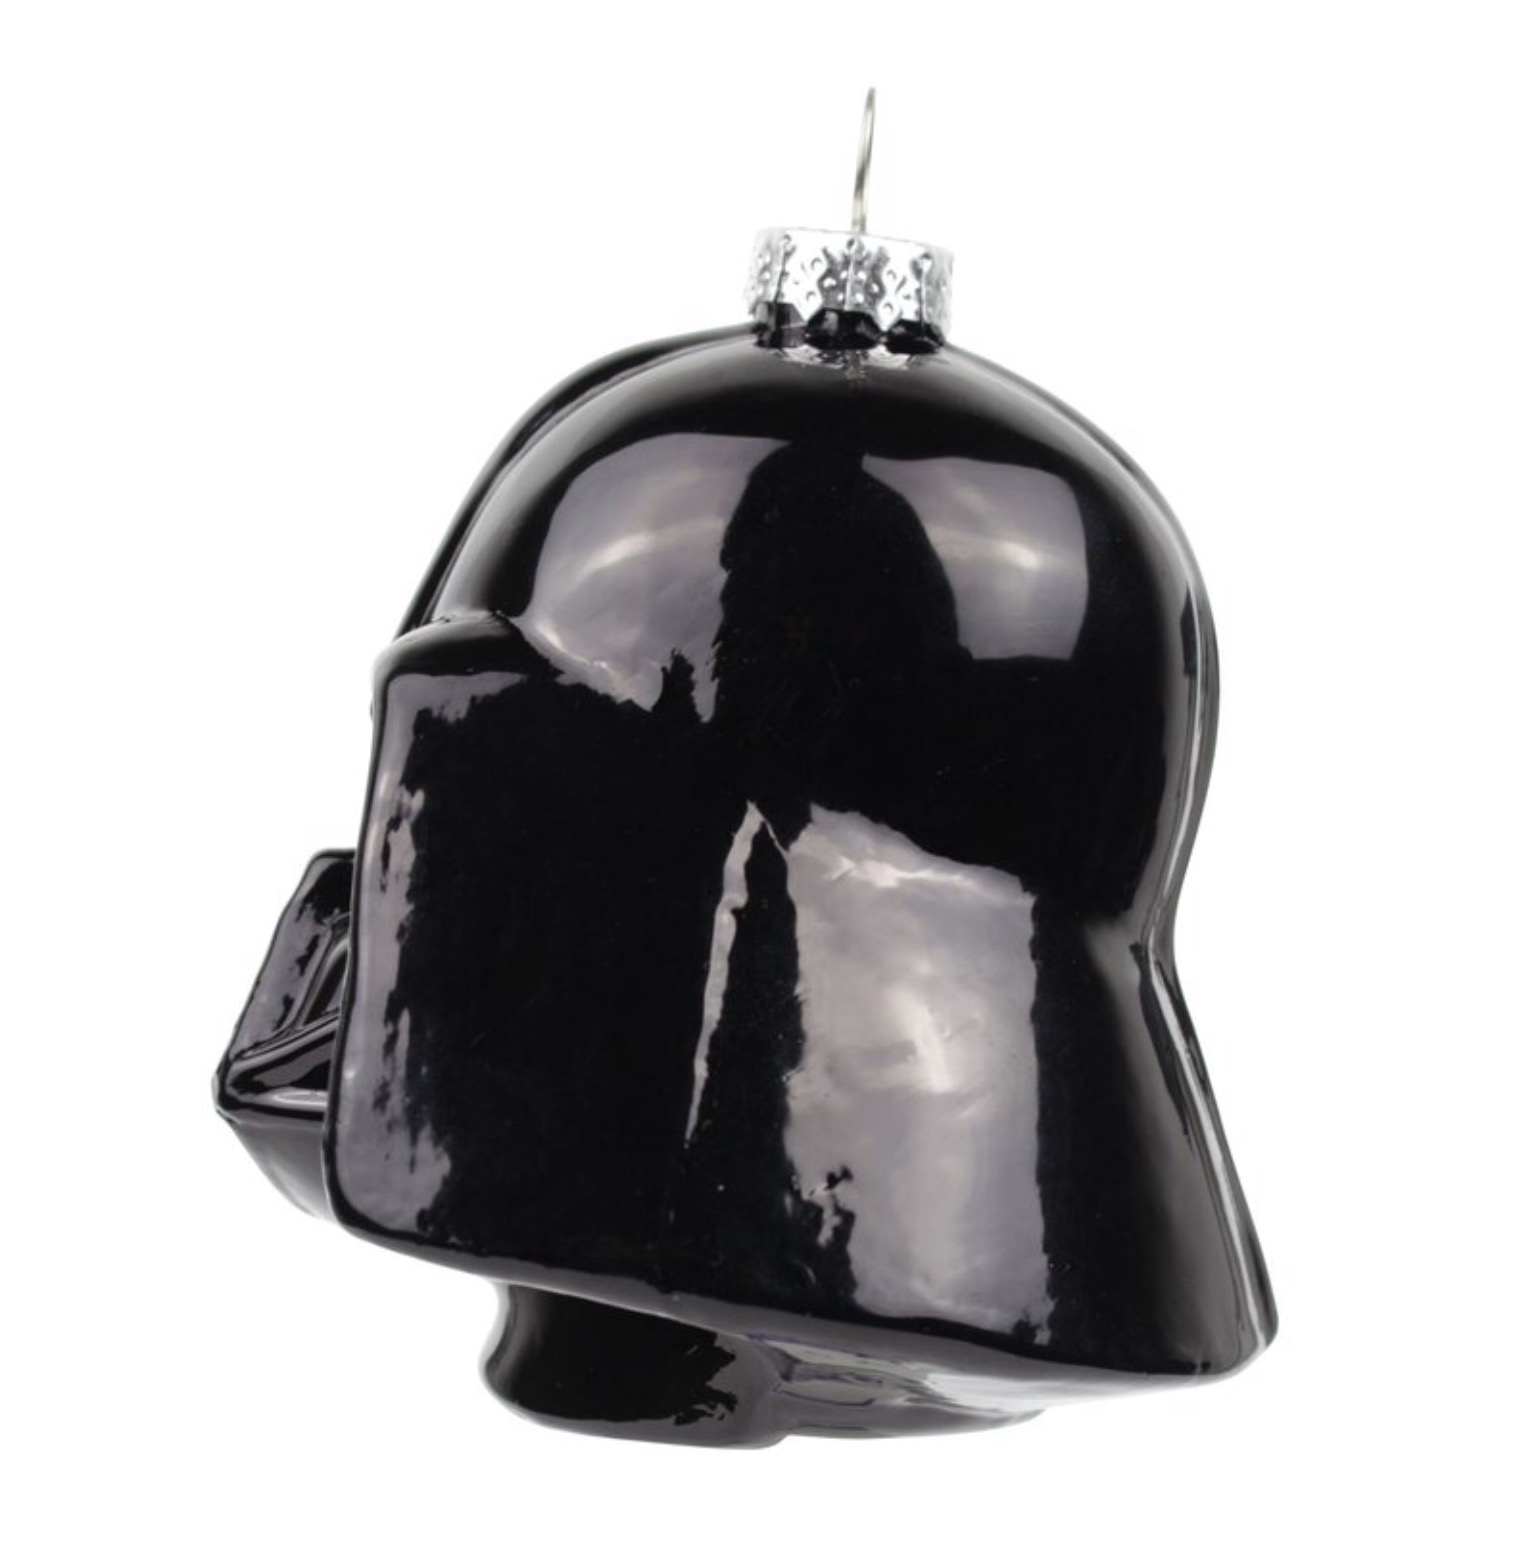 Star Wars Darth Vader karácsonyfadísz